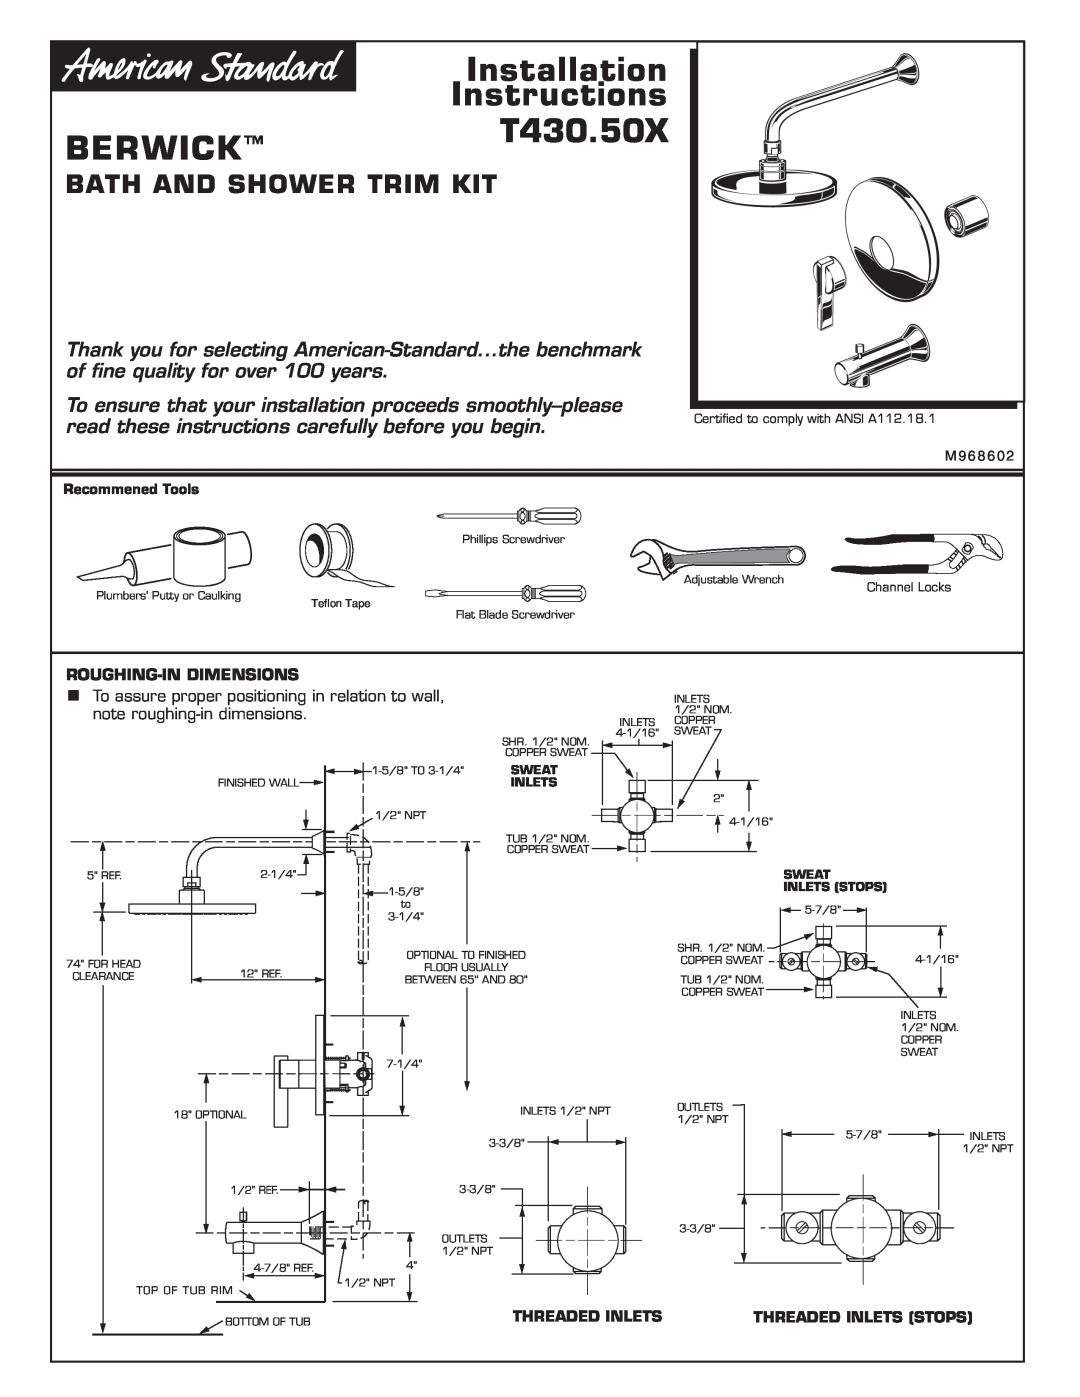 American Standard T430.50X installation instructions Roughing-In Dimensions, Installation, Instructions, Berwick, Sweat 